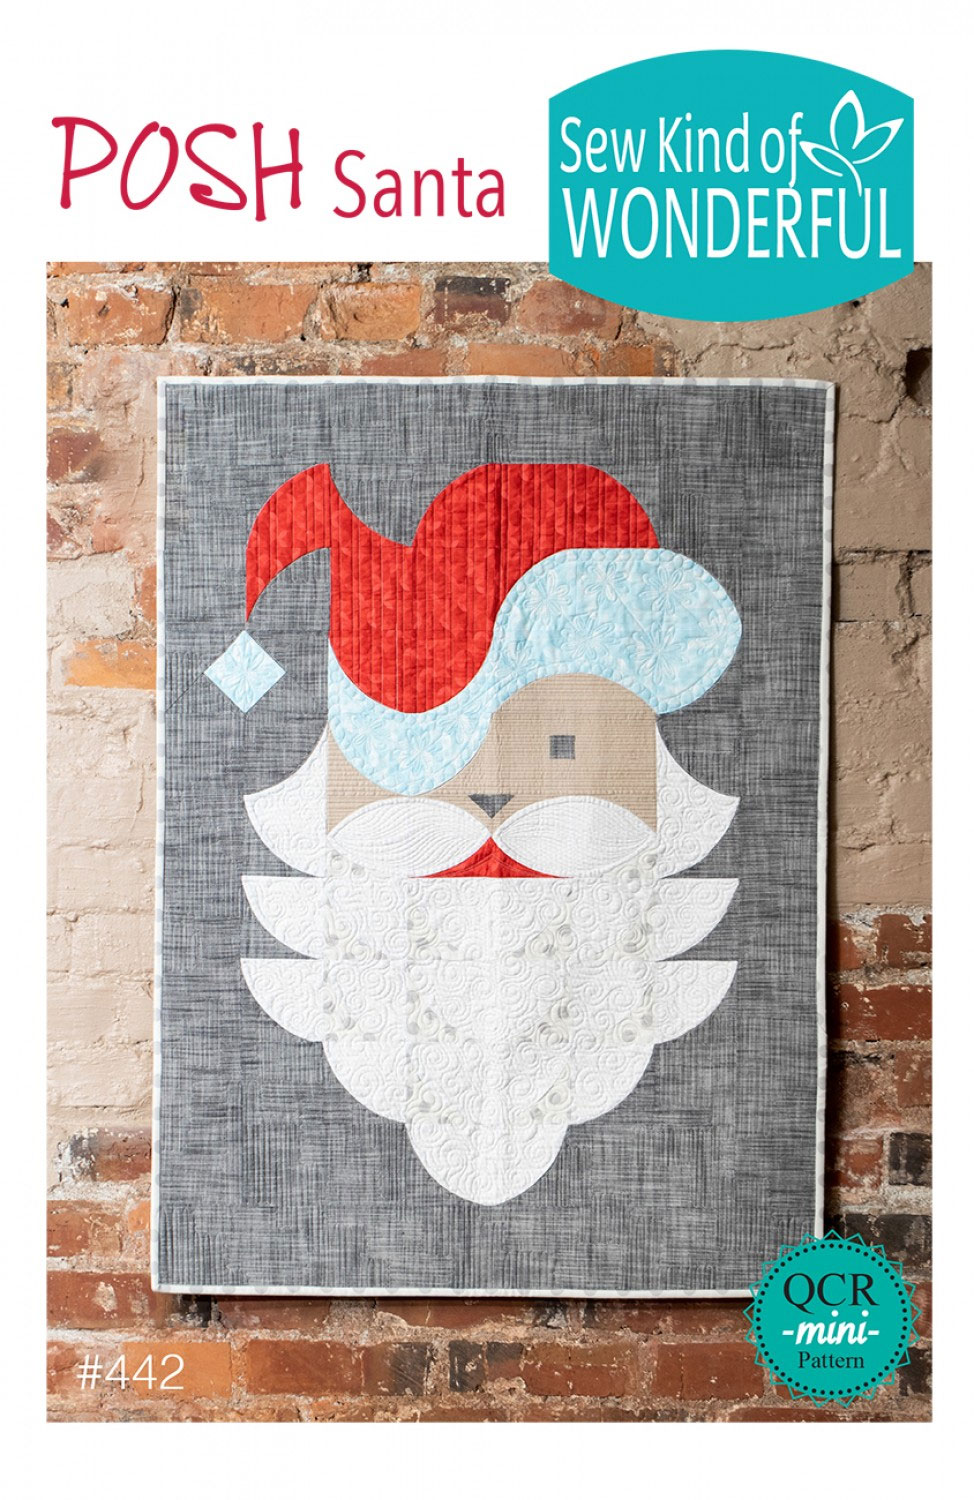 Posh-Santa-sewing-pattern-sew-kind-of-wonderful-front